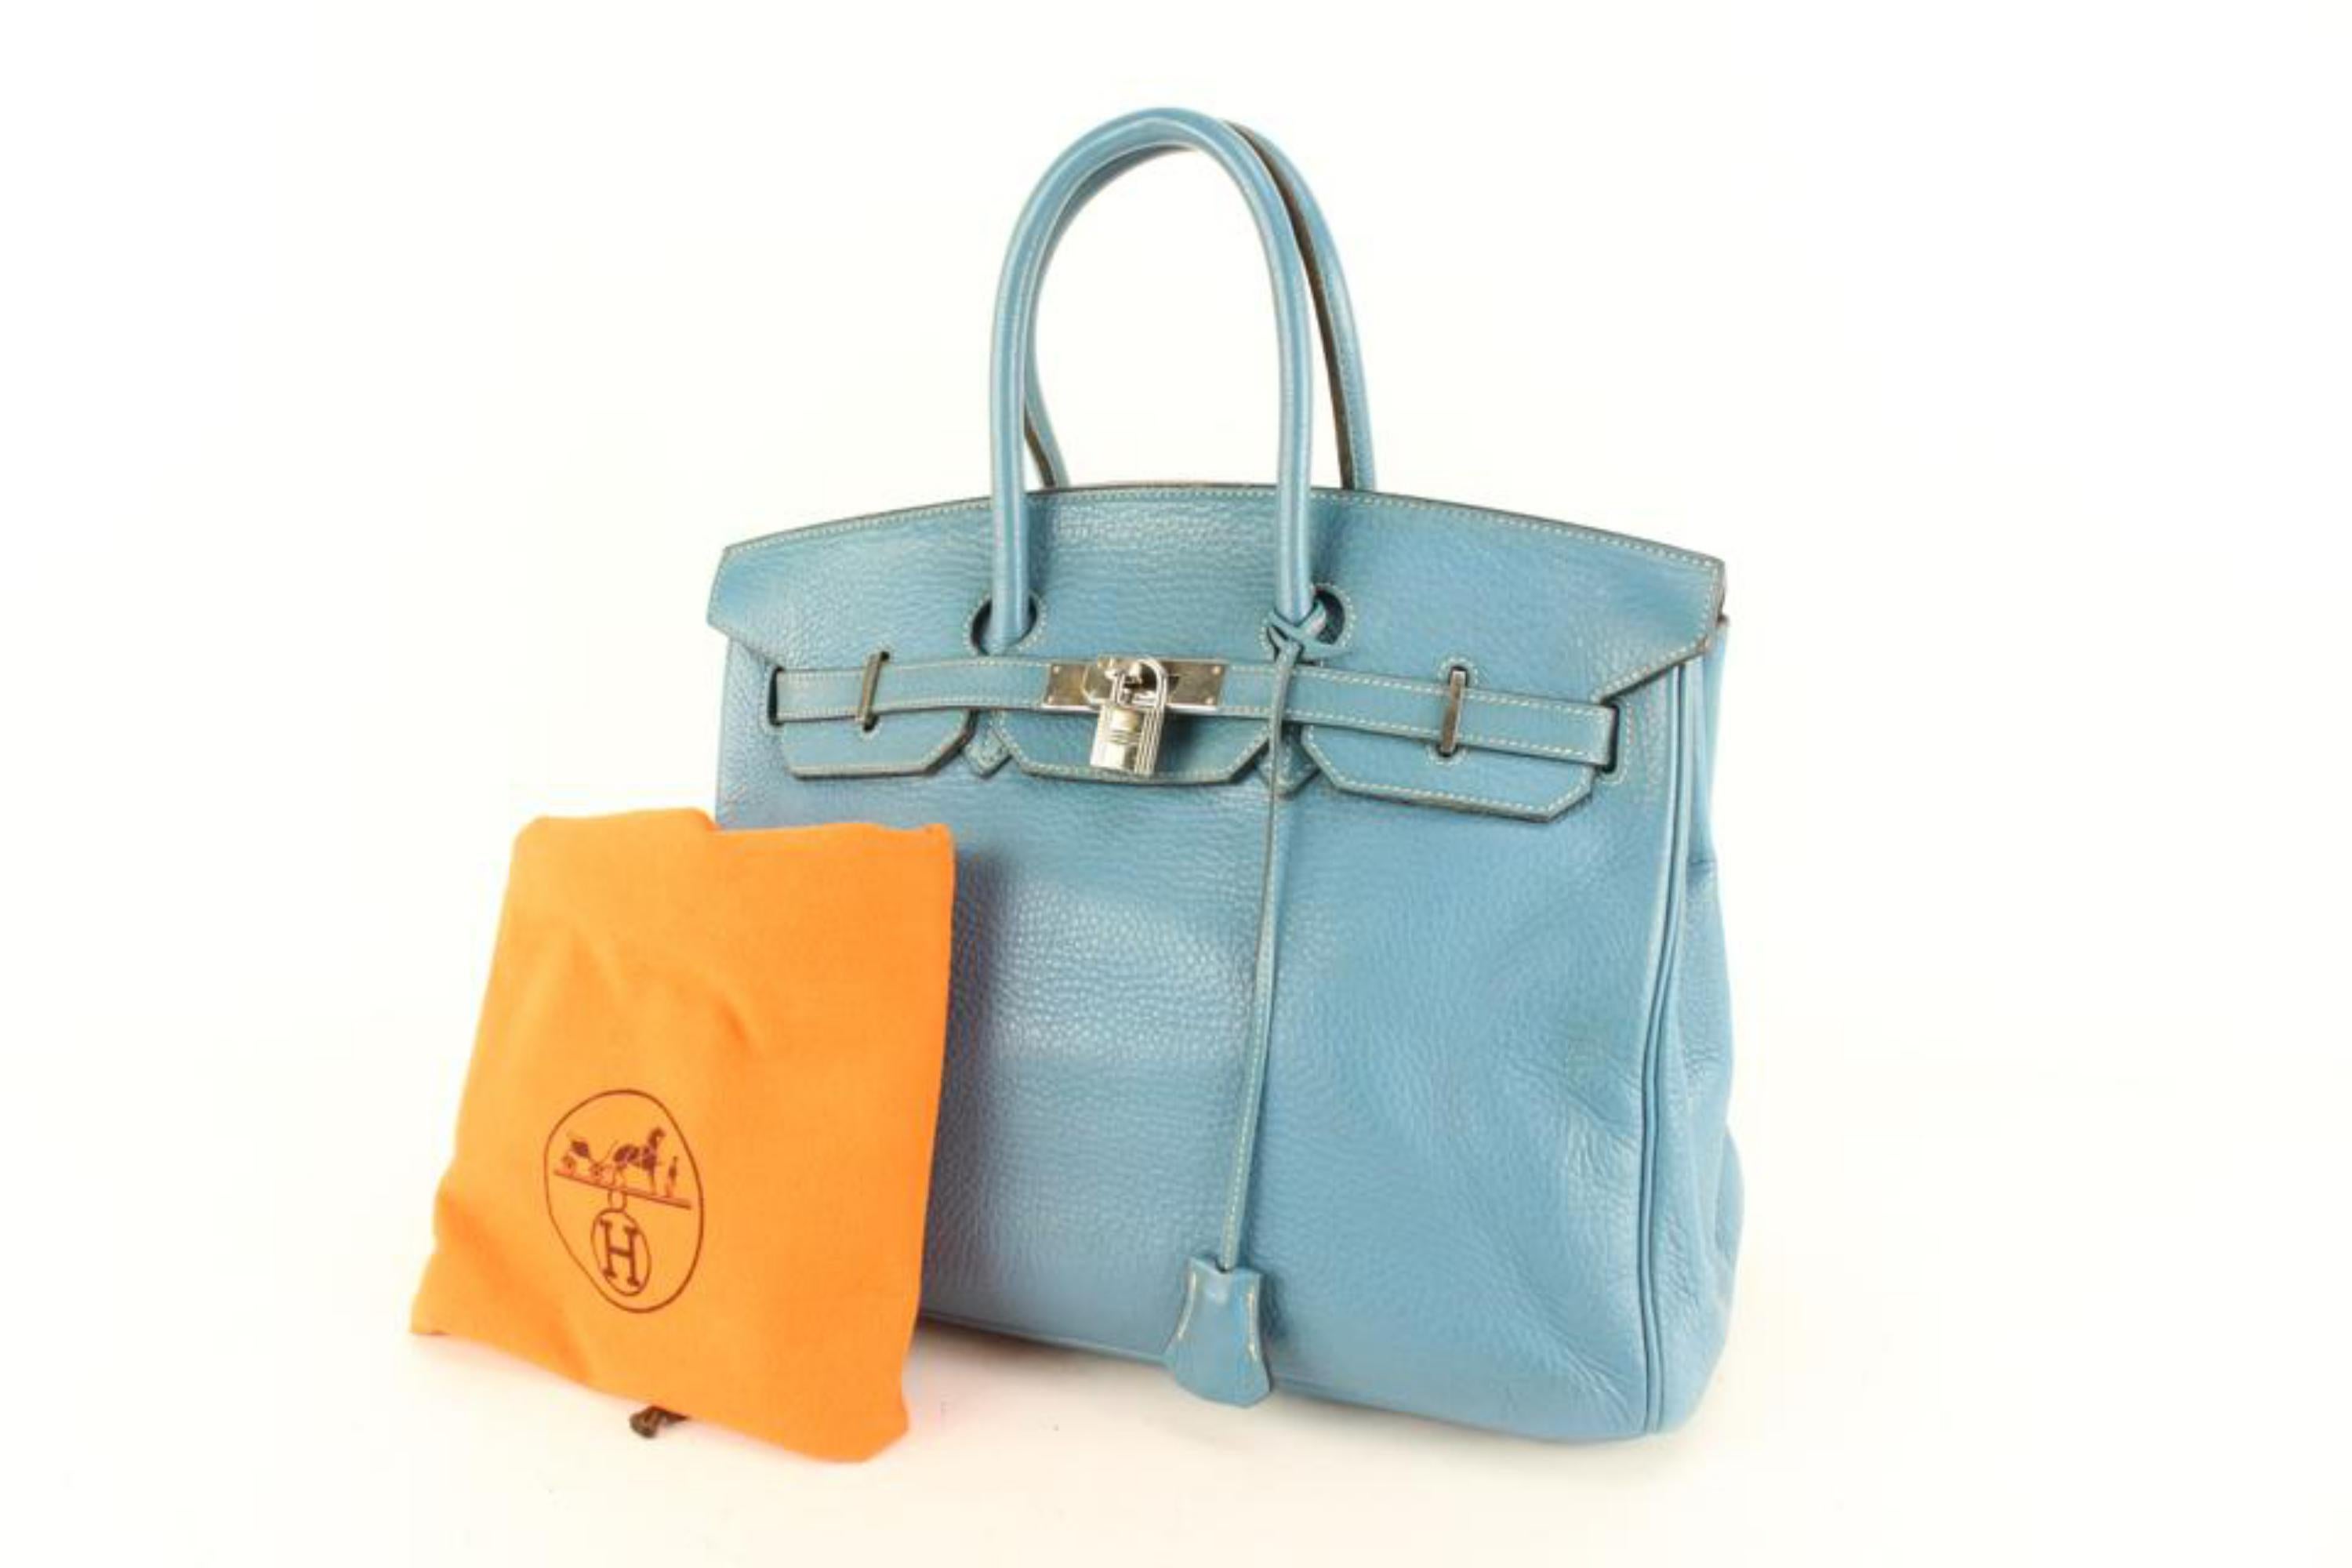 Hermès Blue Jean Togo Leather Birkin 35 31h427s 4